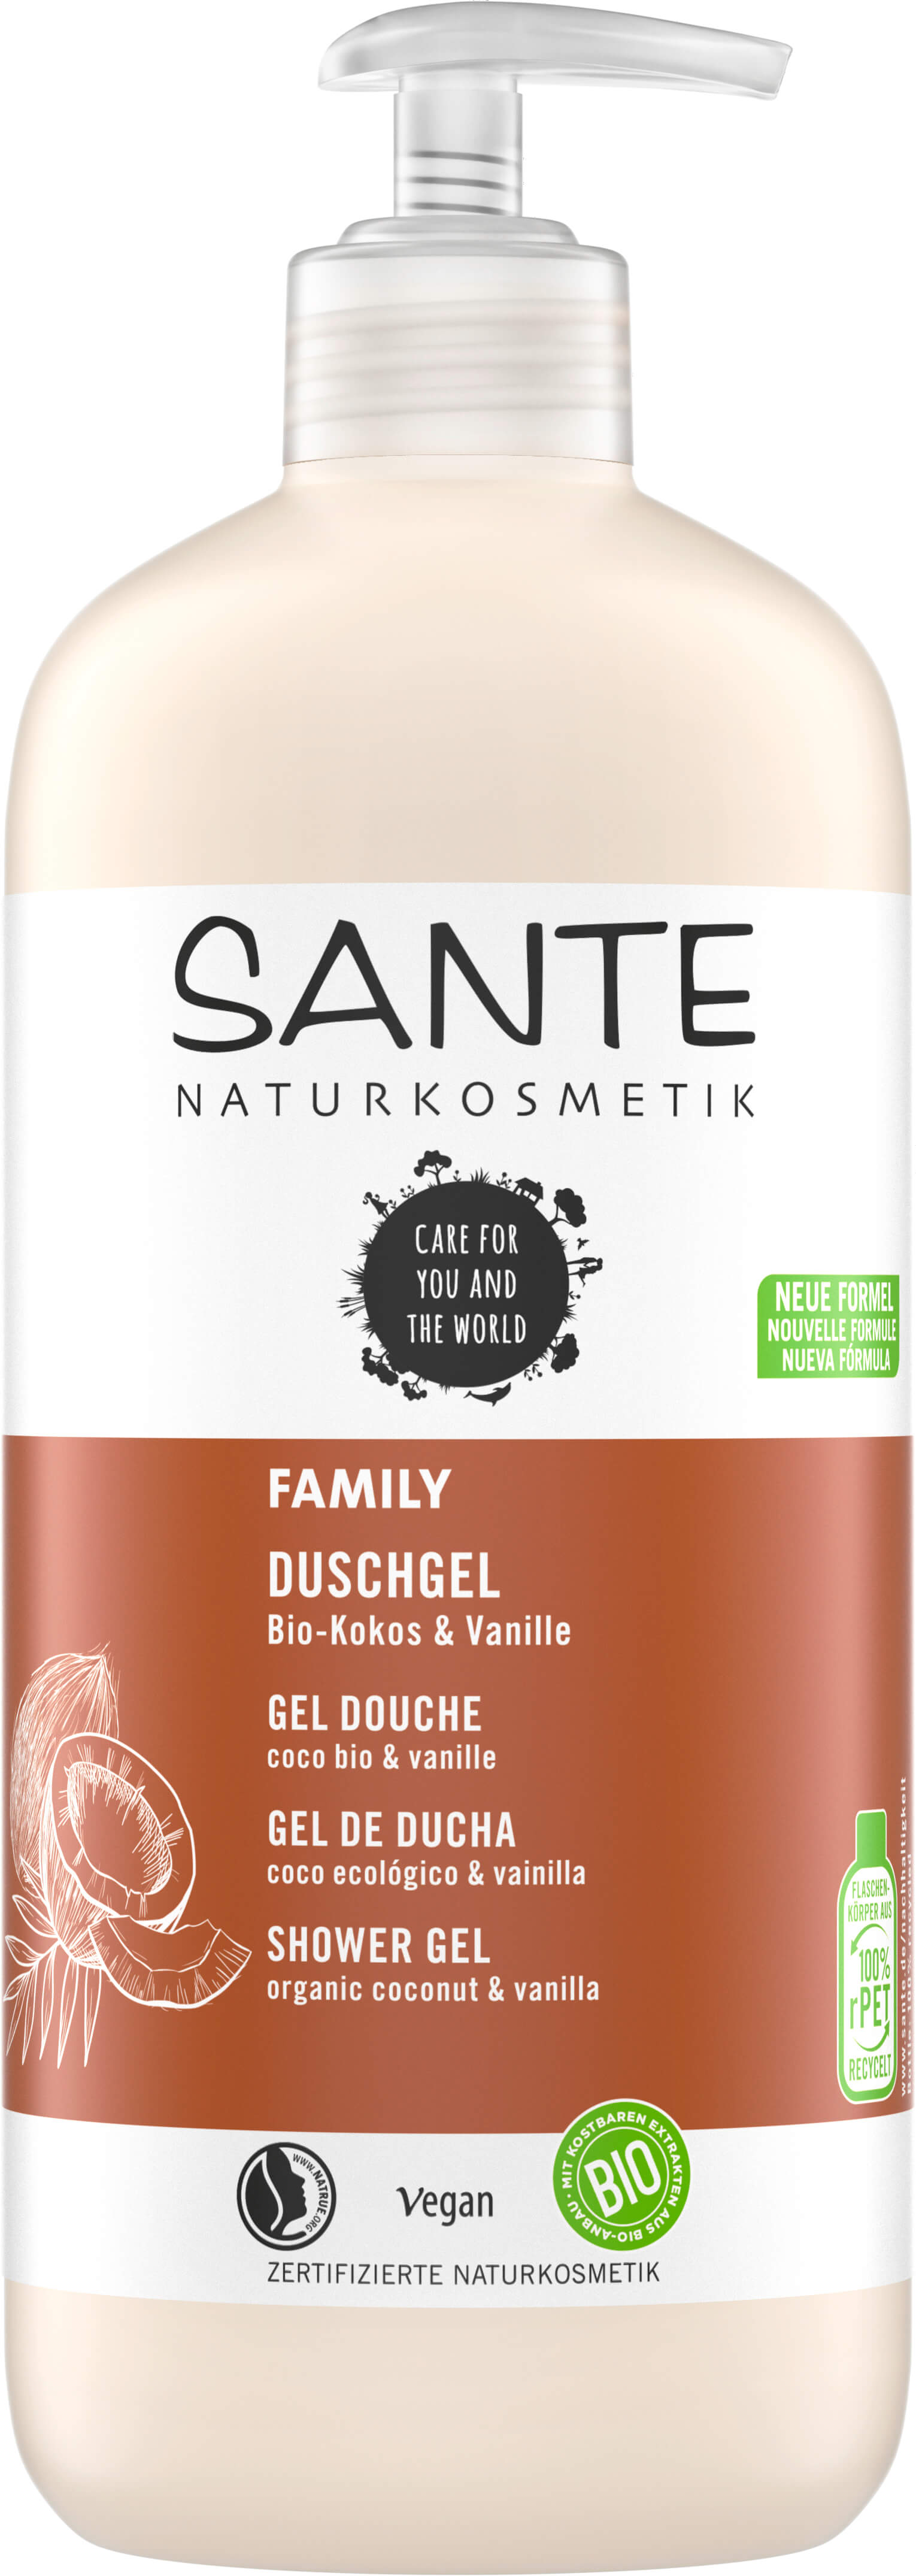 Duschgel Bio-Kokos & Naturkosmetik | SANTE Vanille